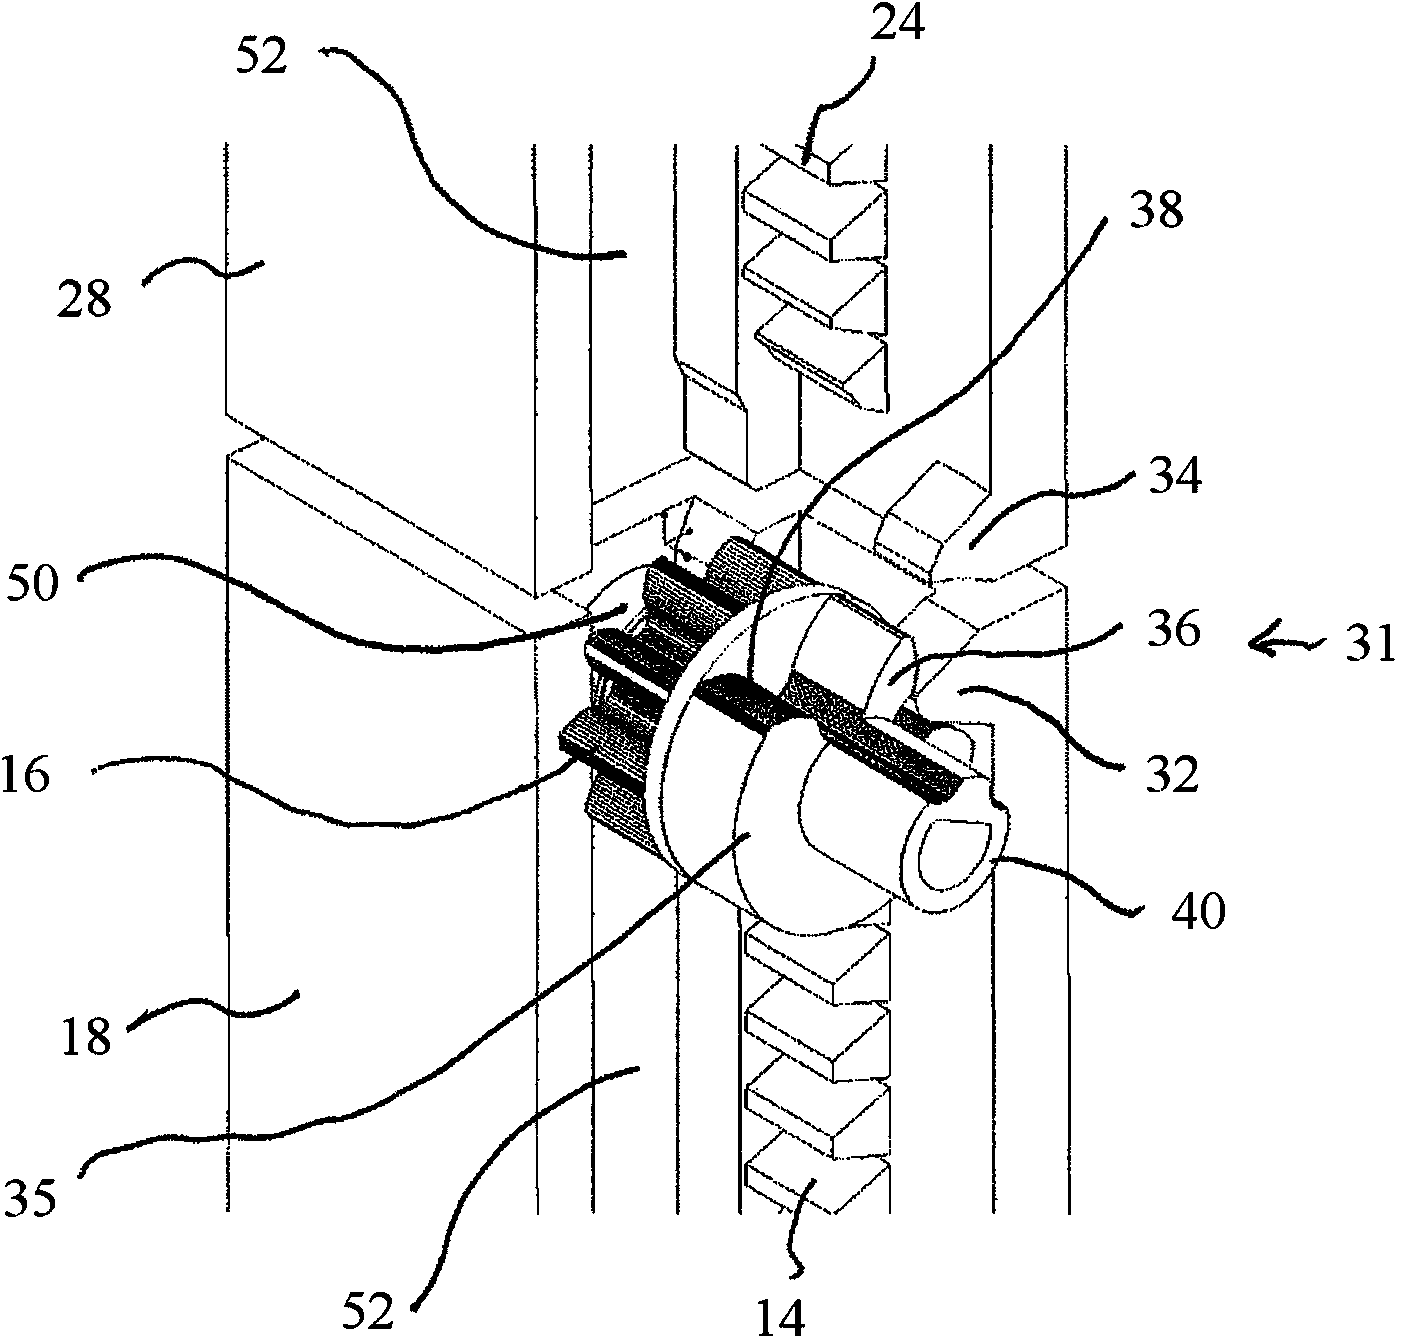 A transmission apparatus